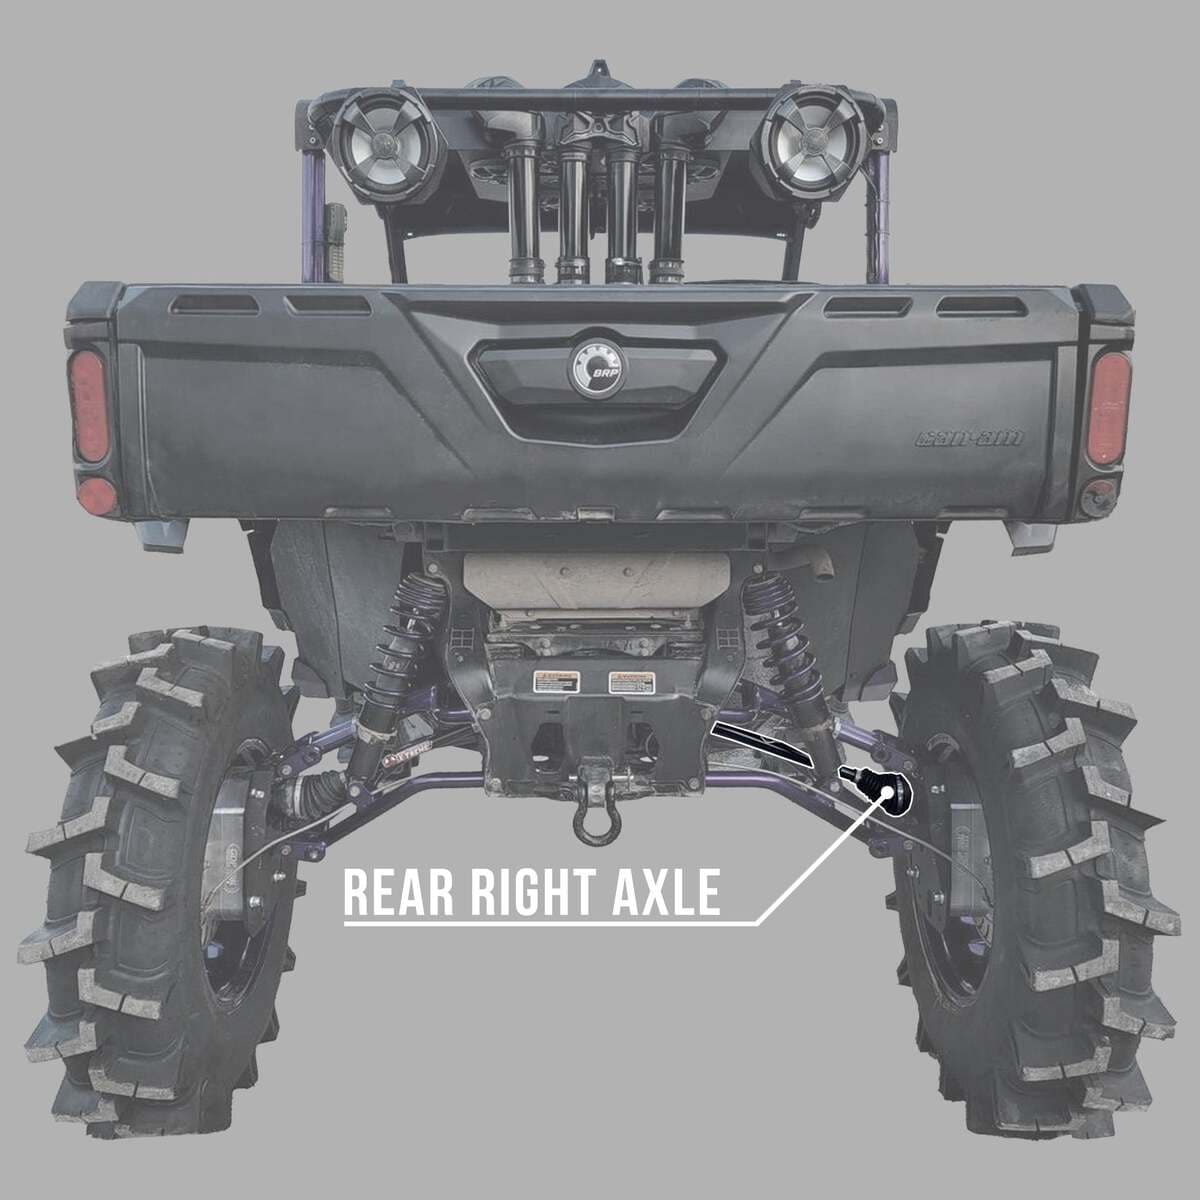 Demon Powersports John Deere RSX850 Rugged Performance Axle